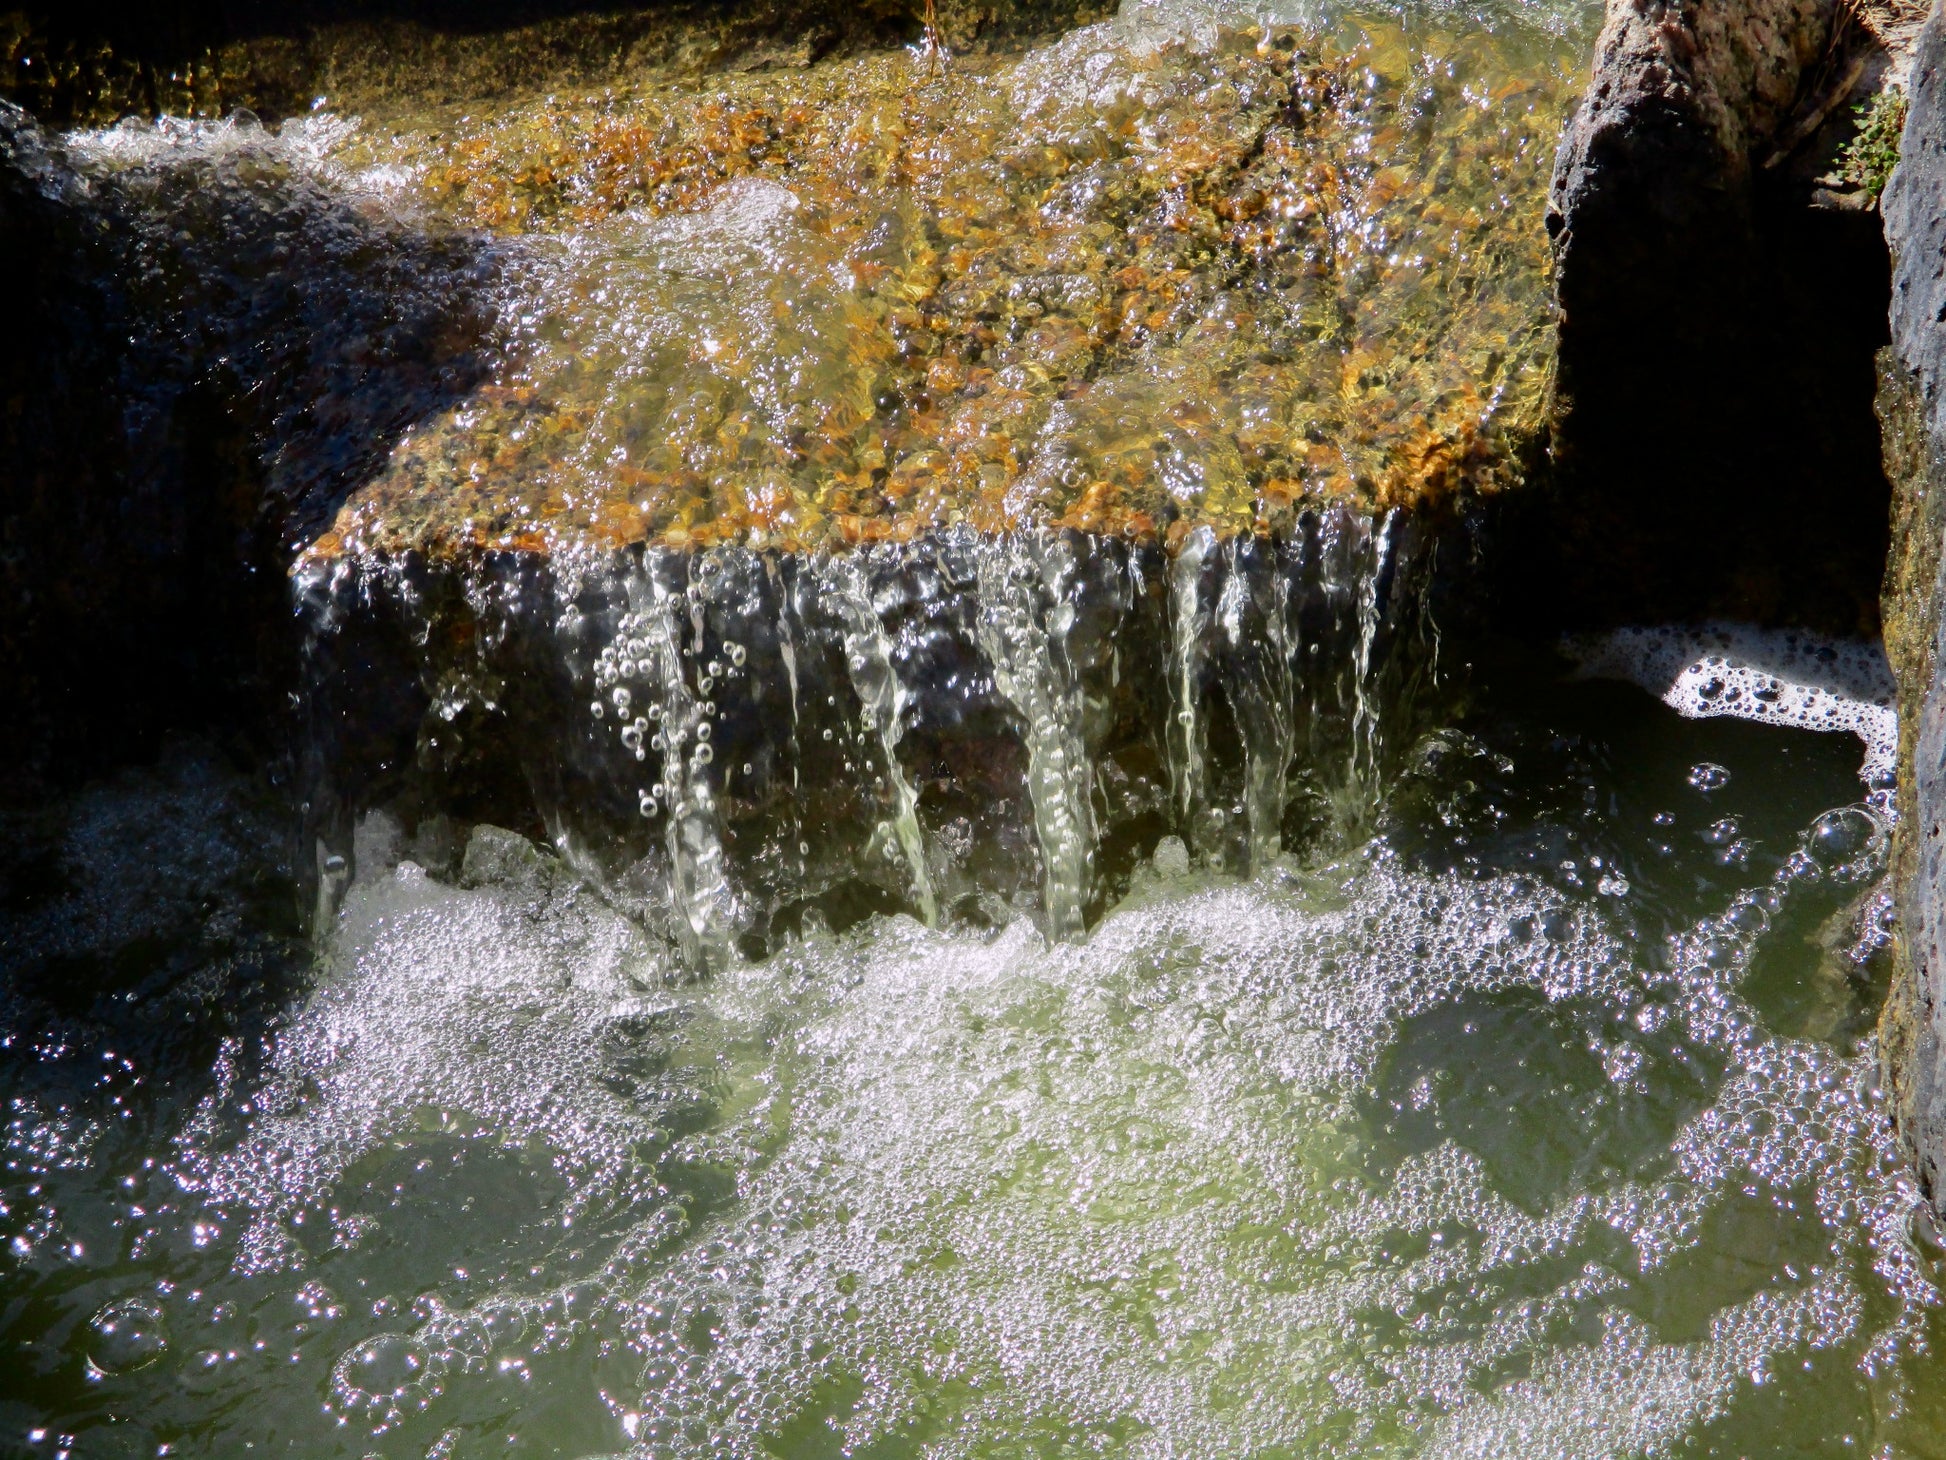 Photograph of Waterfall